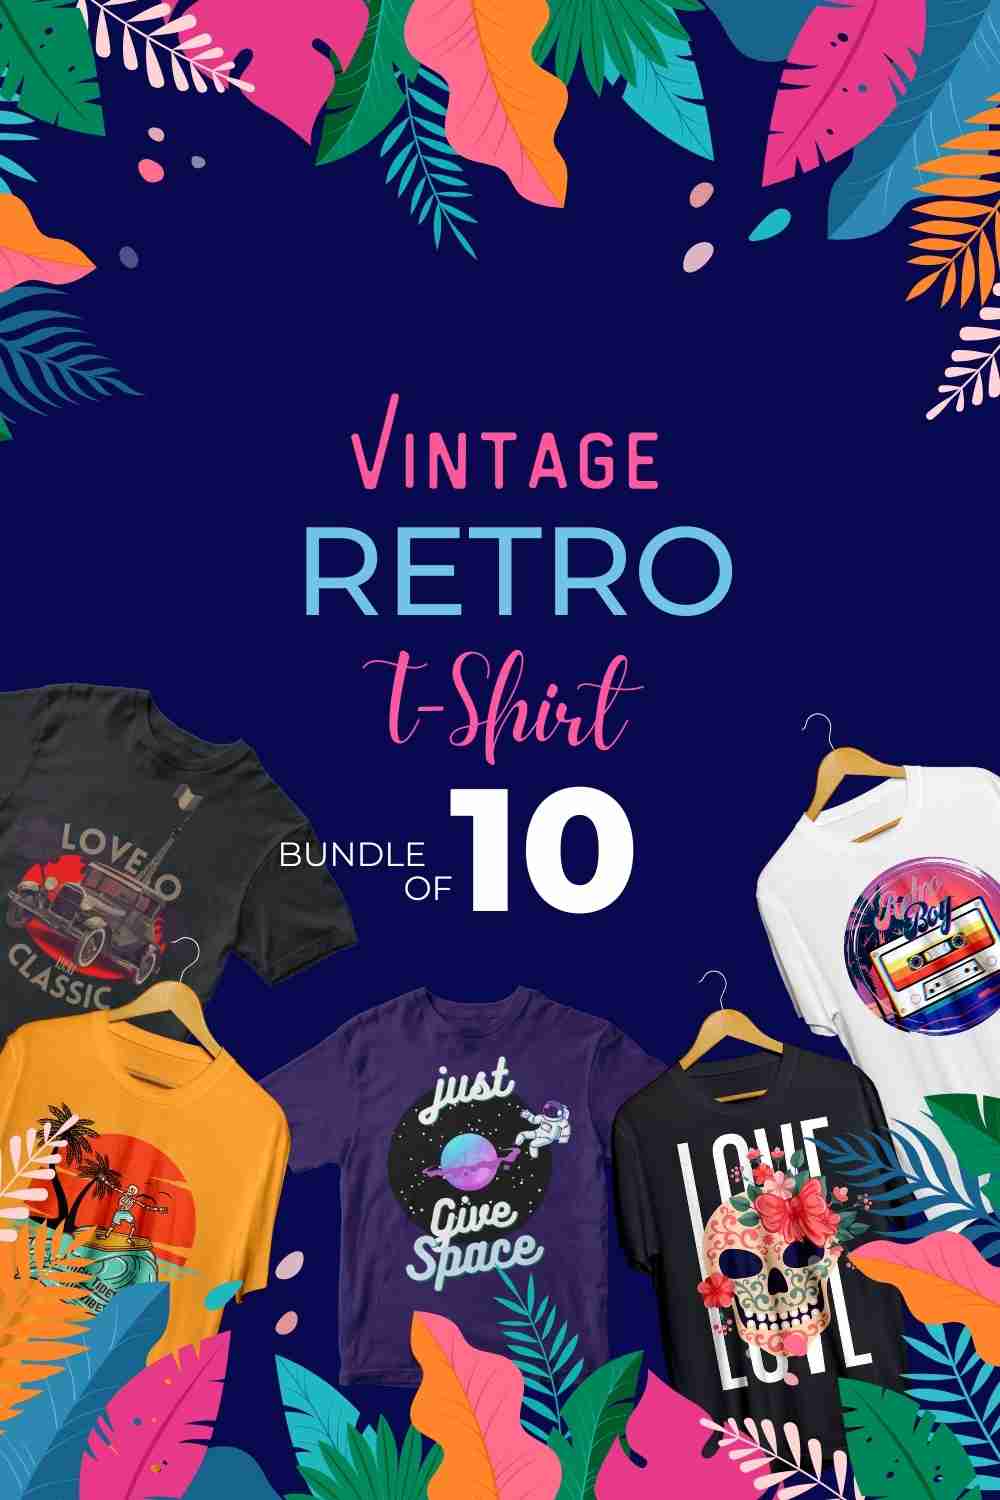 Modern Vintage Retro T-Shirt Design pinterest image.